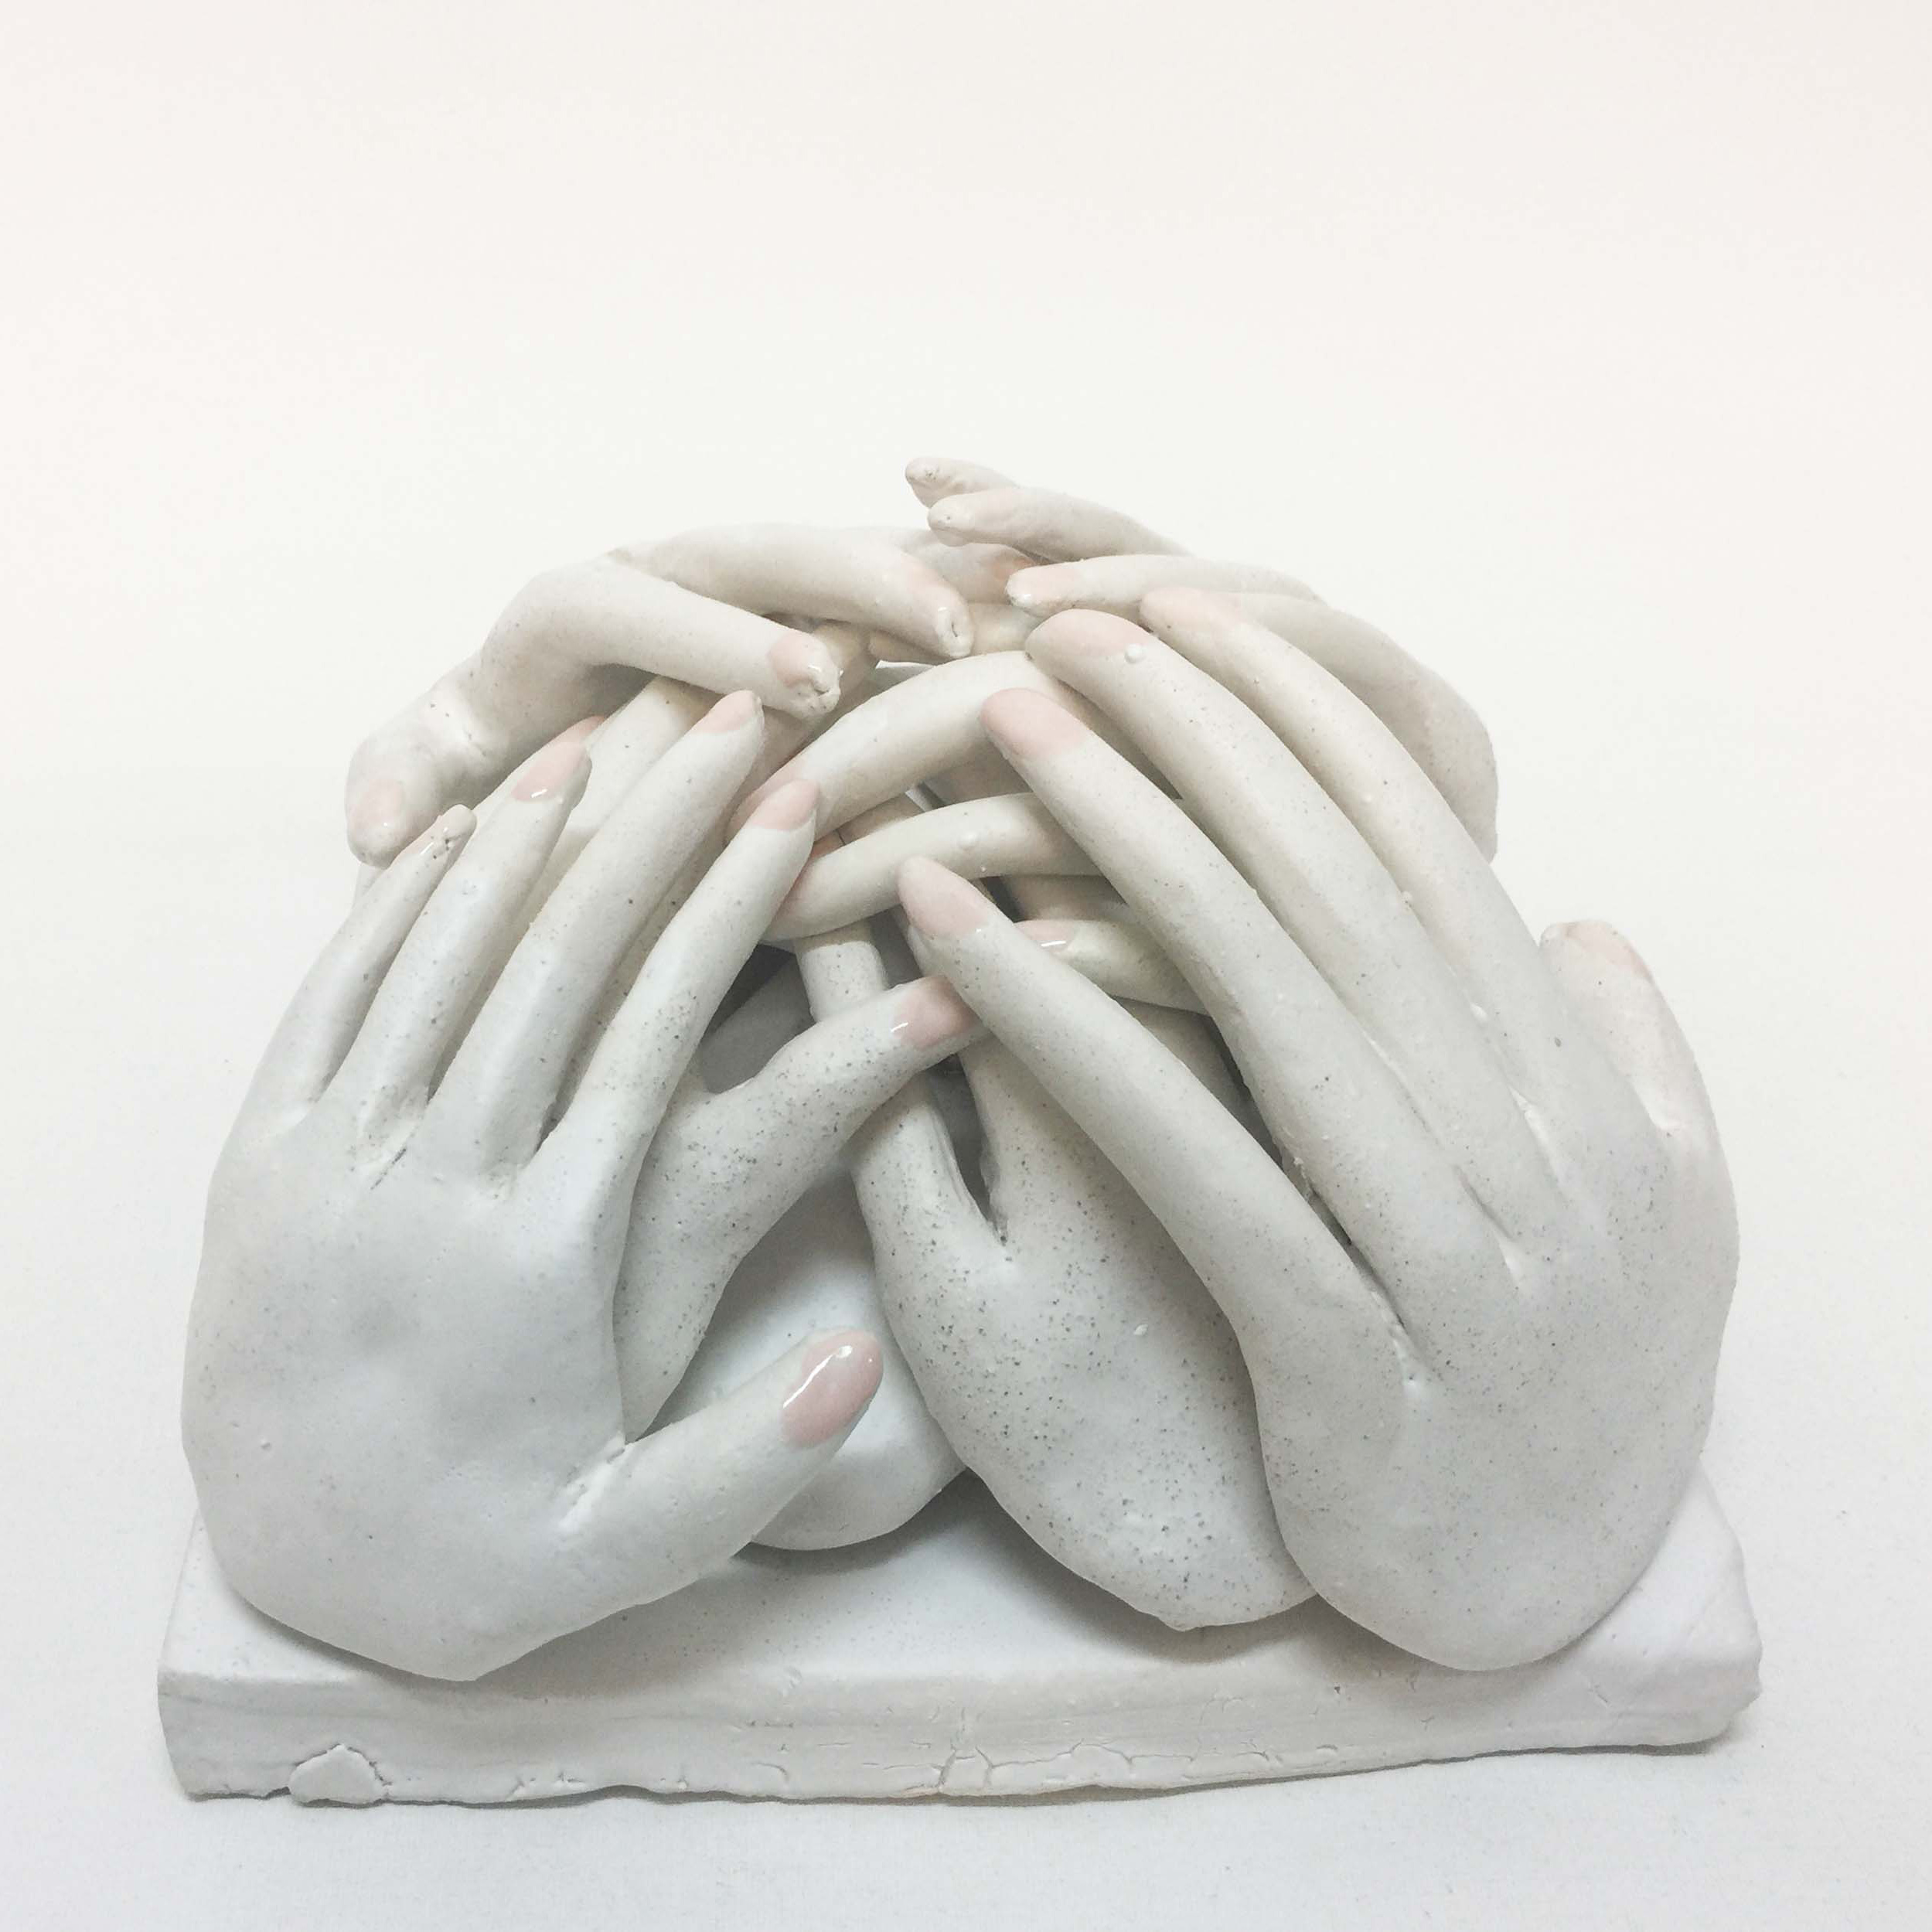 Lusesita, Manos a la obra, 2018, ceramic and enamel, 12x21x21 cm